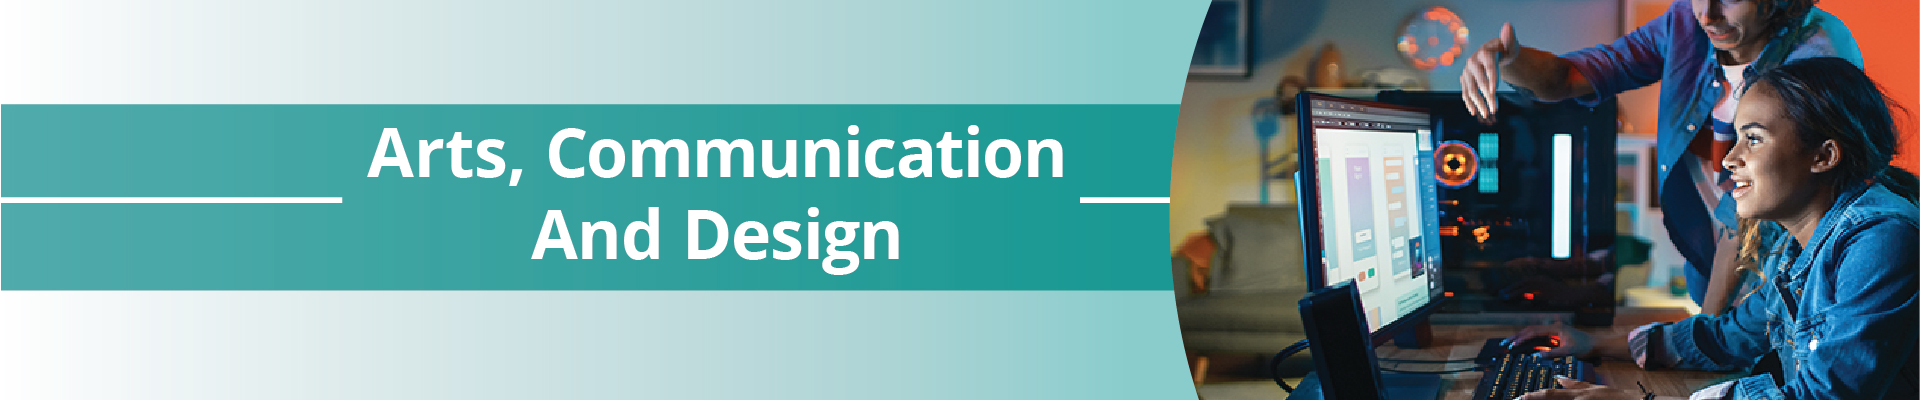 Arts, Communication and Design